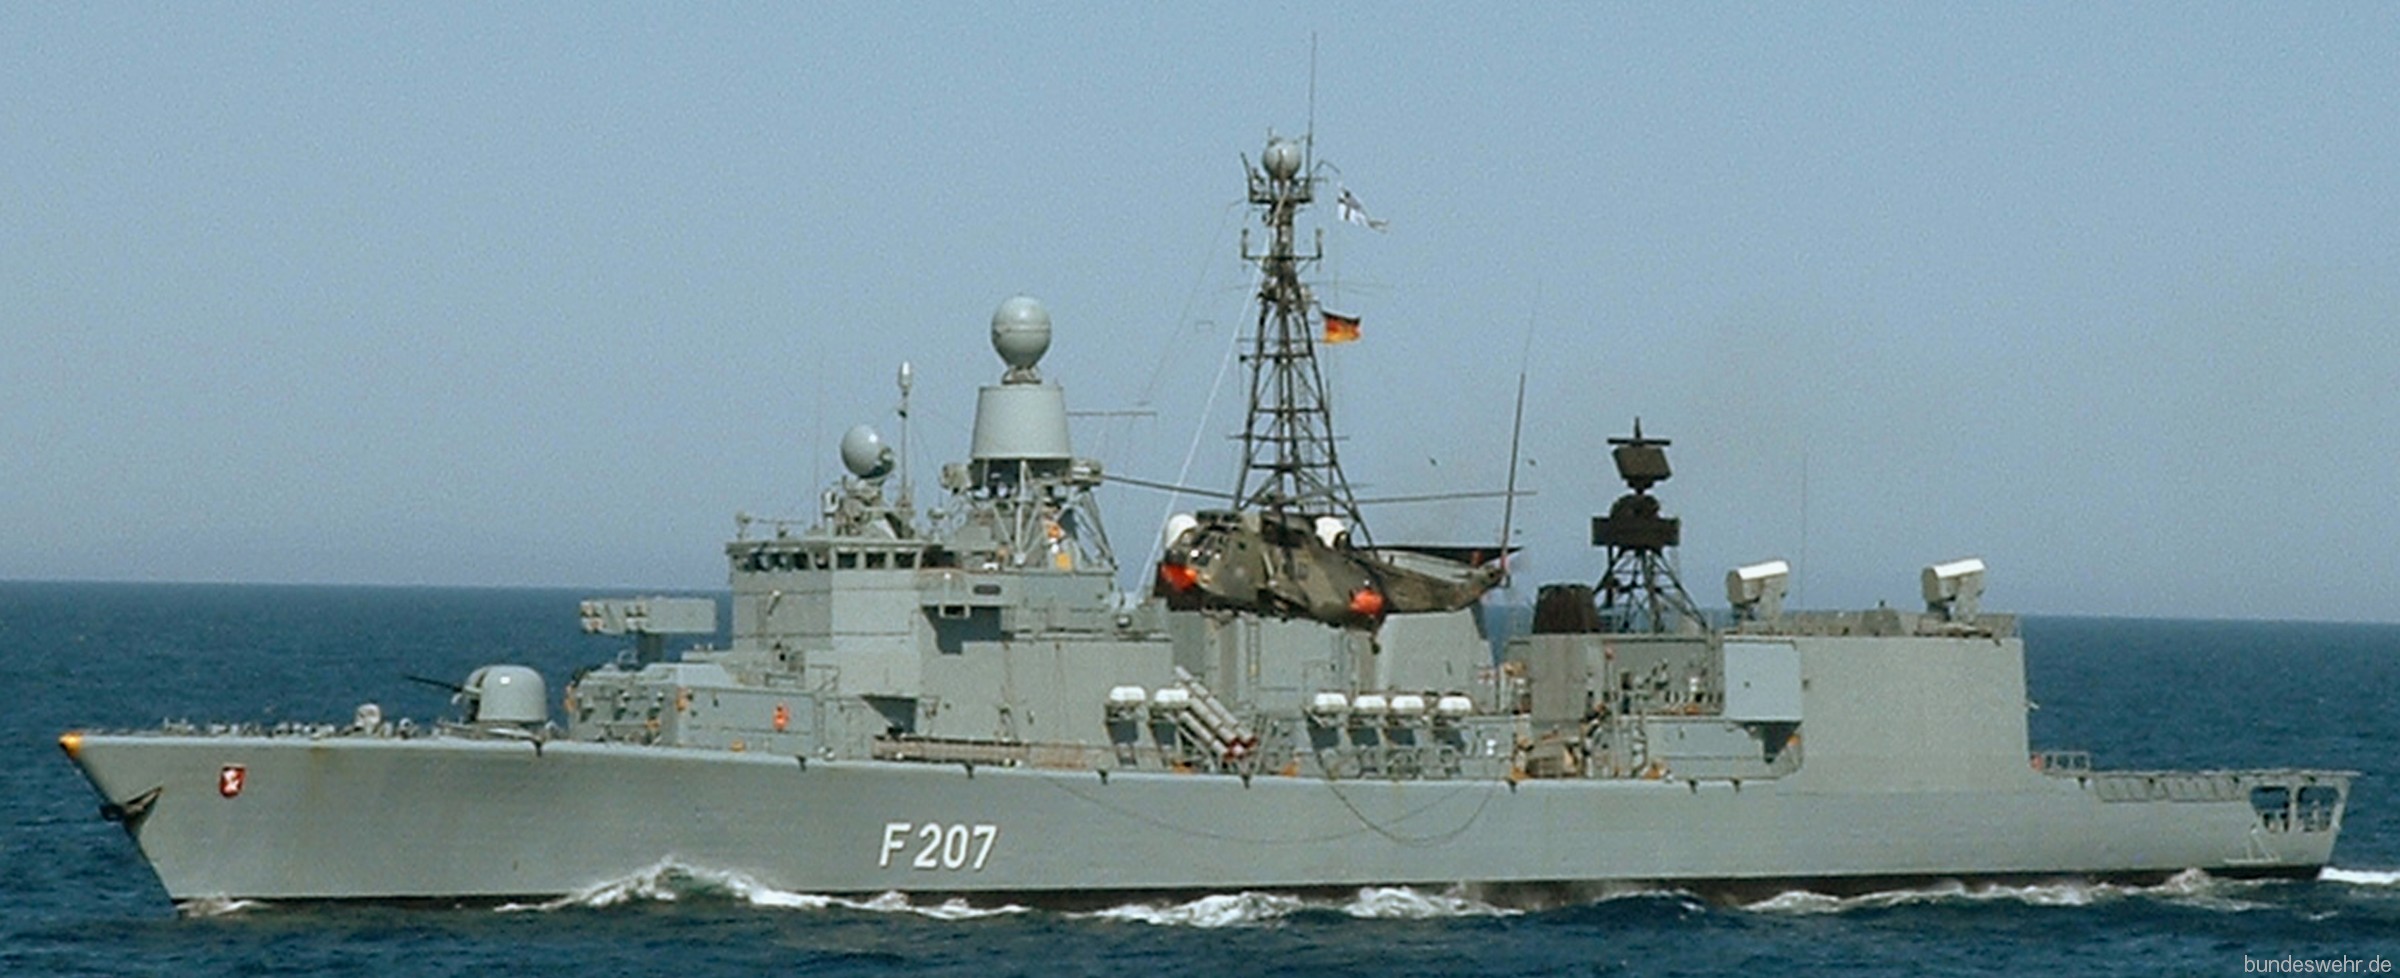 f-207 fgs bremen type 122 class frigate german navy deutsche marine fregatte 06 helicopter